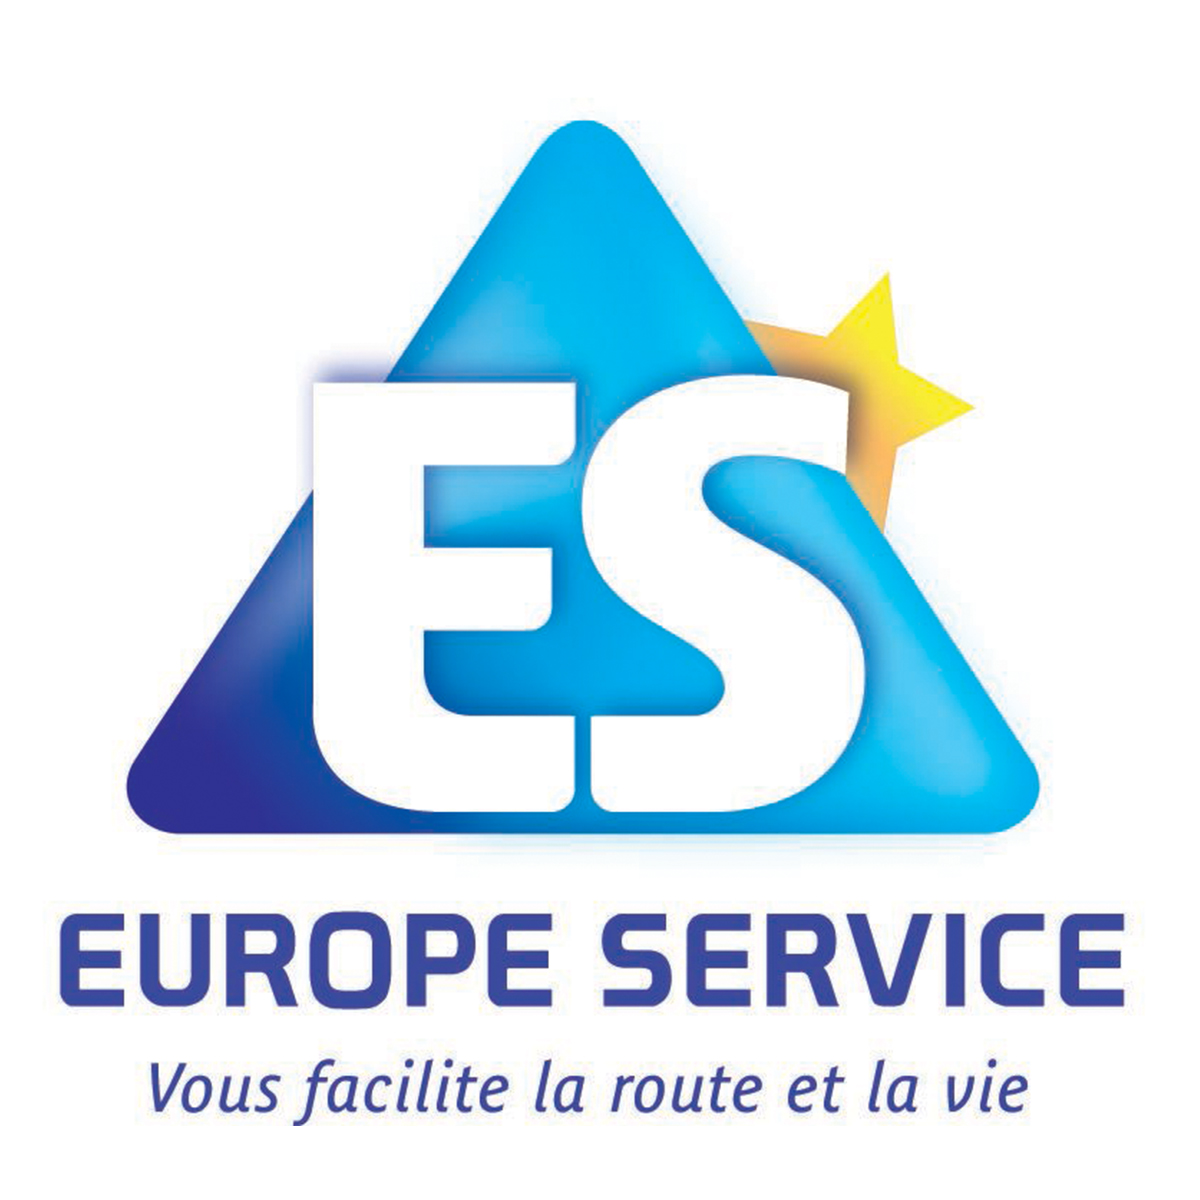 EUROPE SERVICE